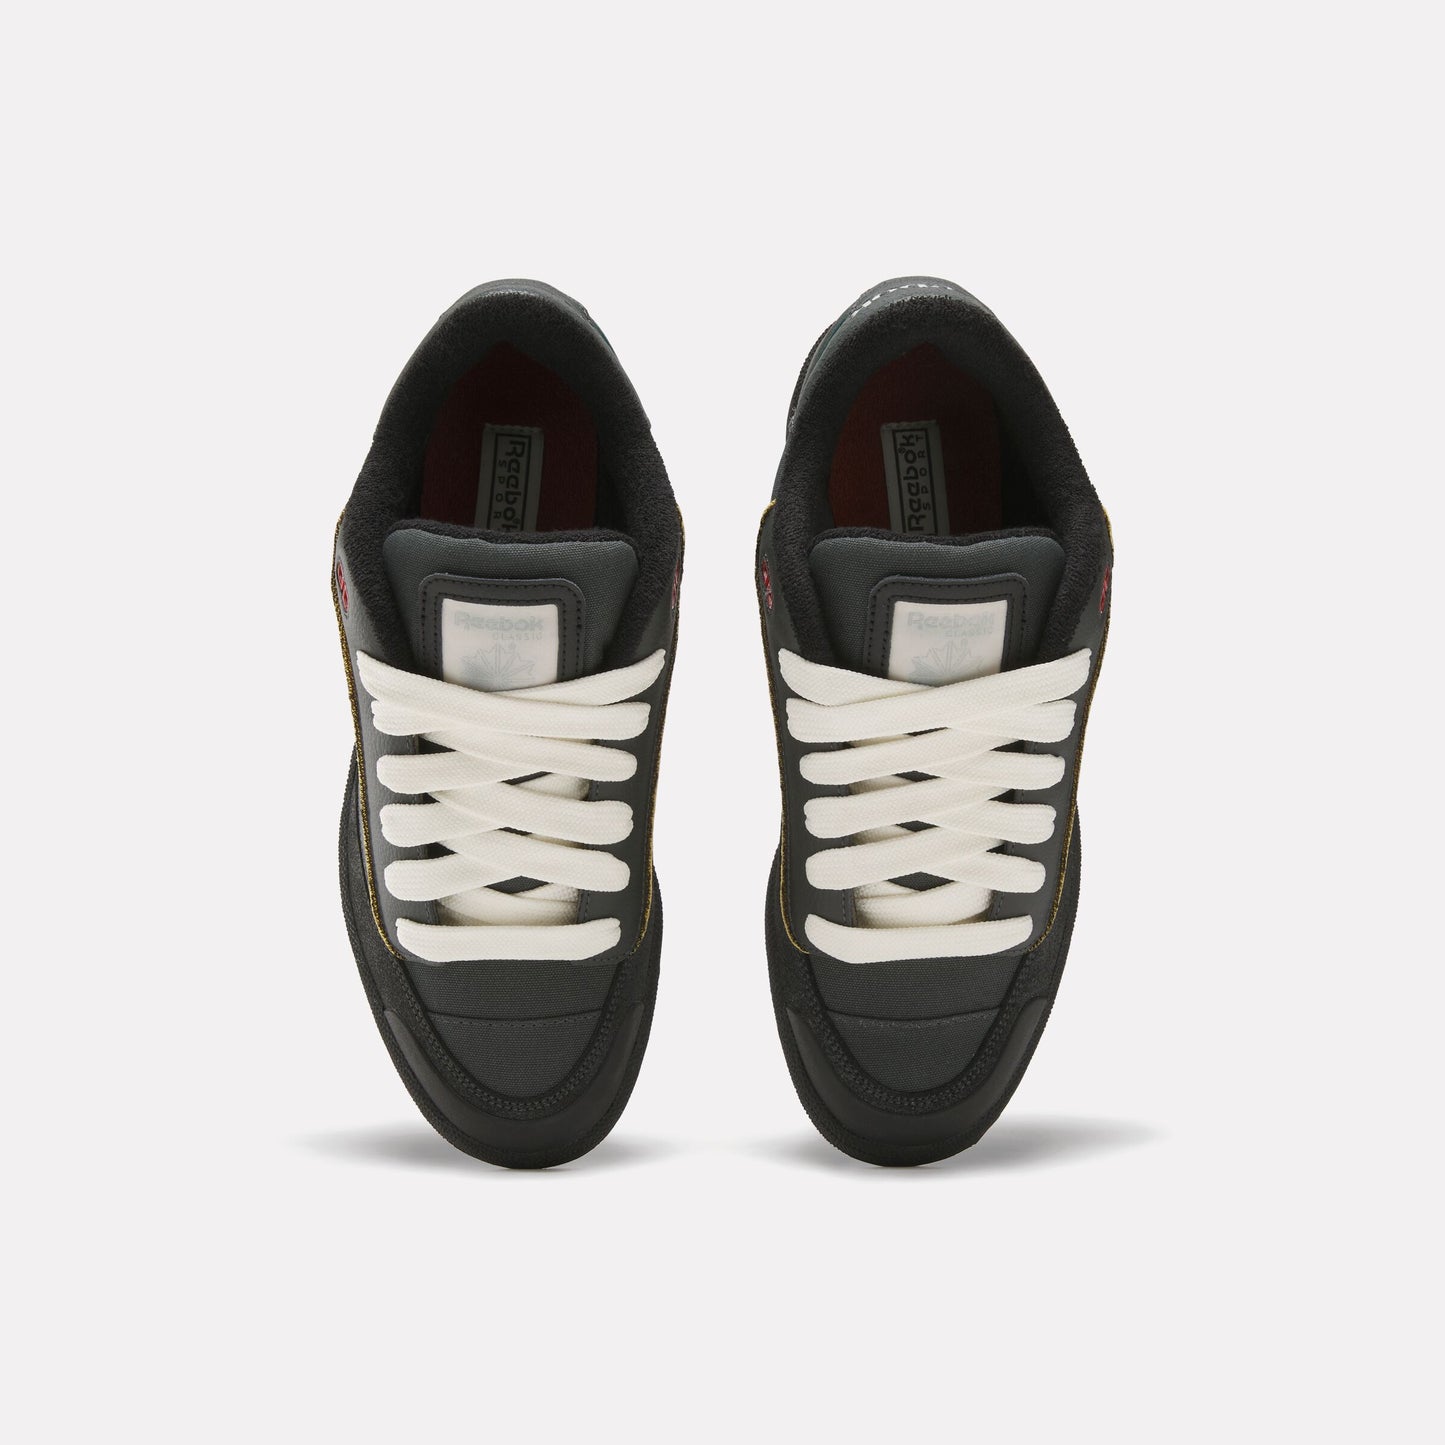 Club C Bulc Shoes Grey/Black